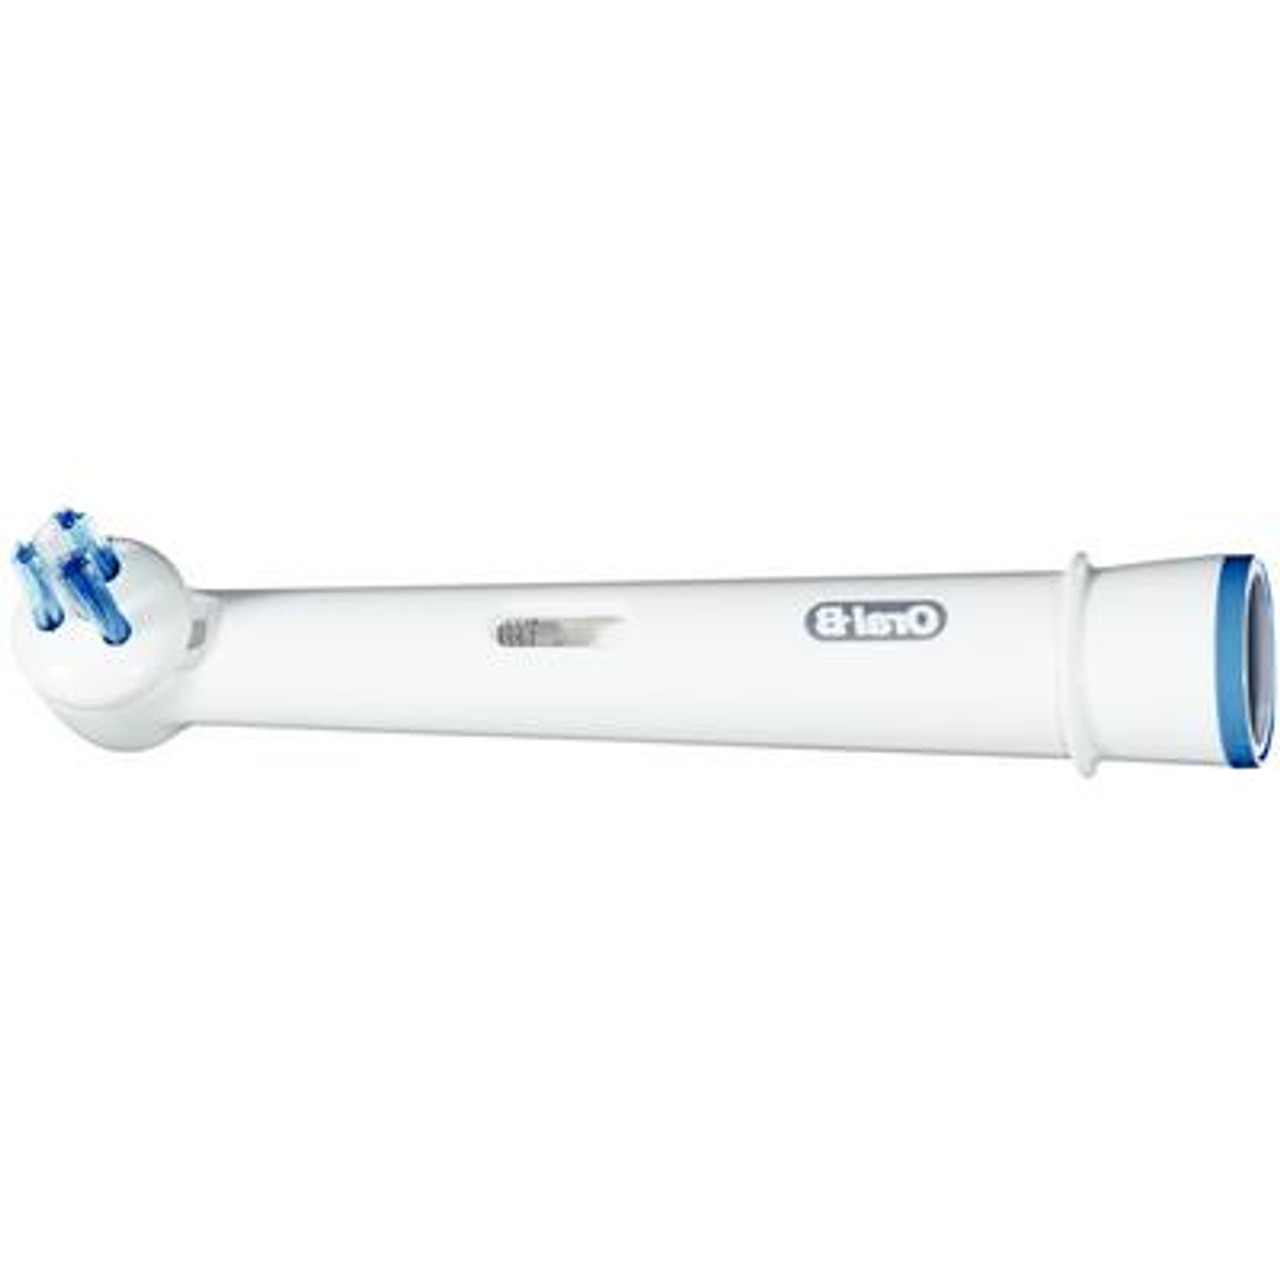 P&G Crest Oral-B Power Toothbrush Interproximal Clean Brush Head Refills, 1 pk/card, 6 card/bx(old part #s 80274160, 80286873, 80243931, 80215569, 64711725)